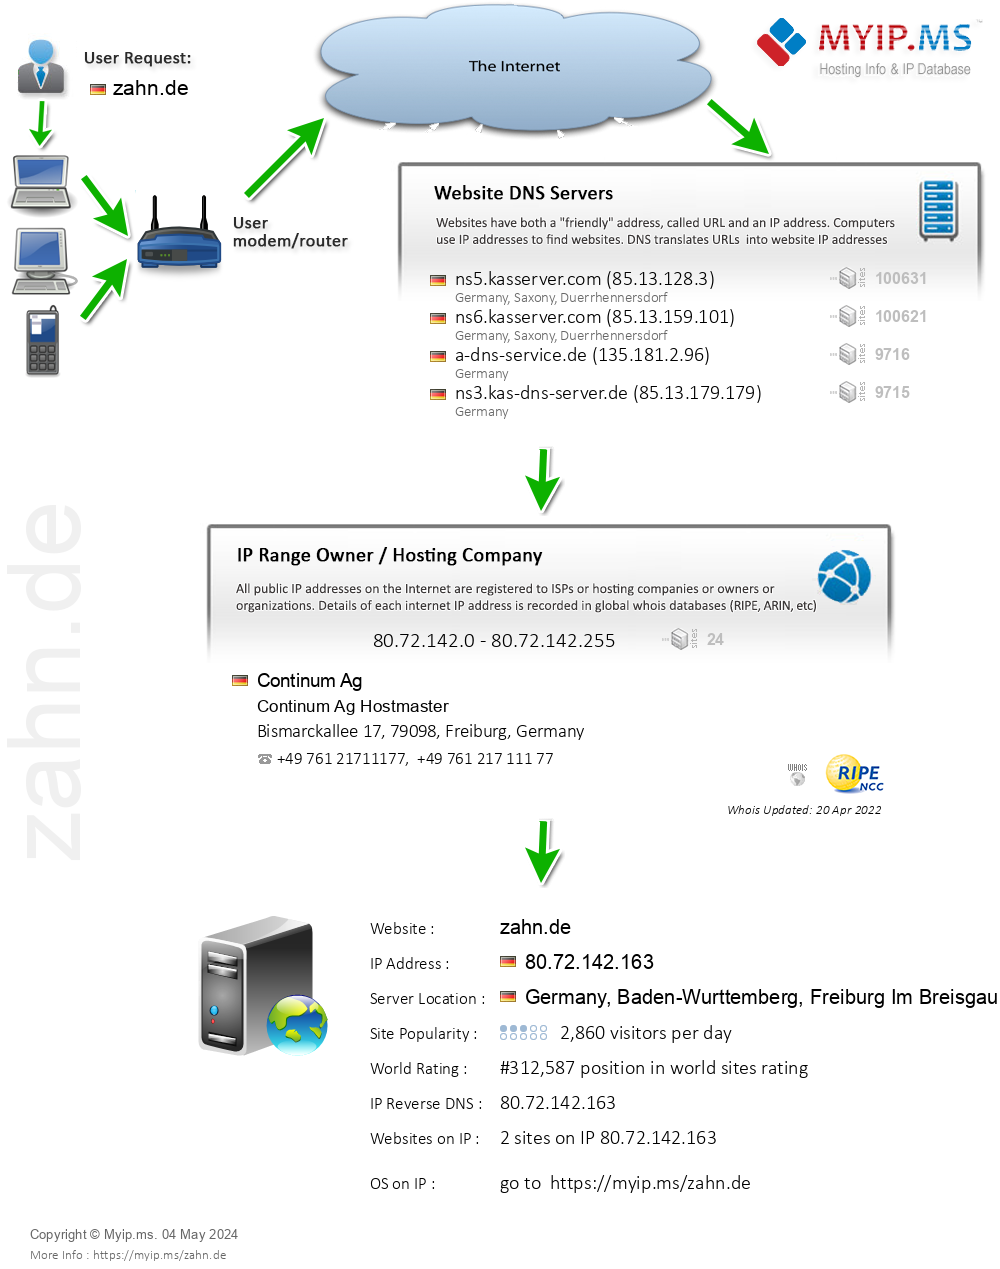 Zahn.de - Website Hosting Visual IP Diagram